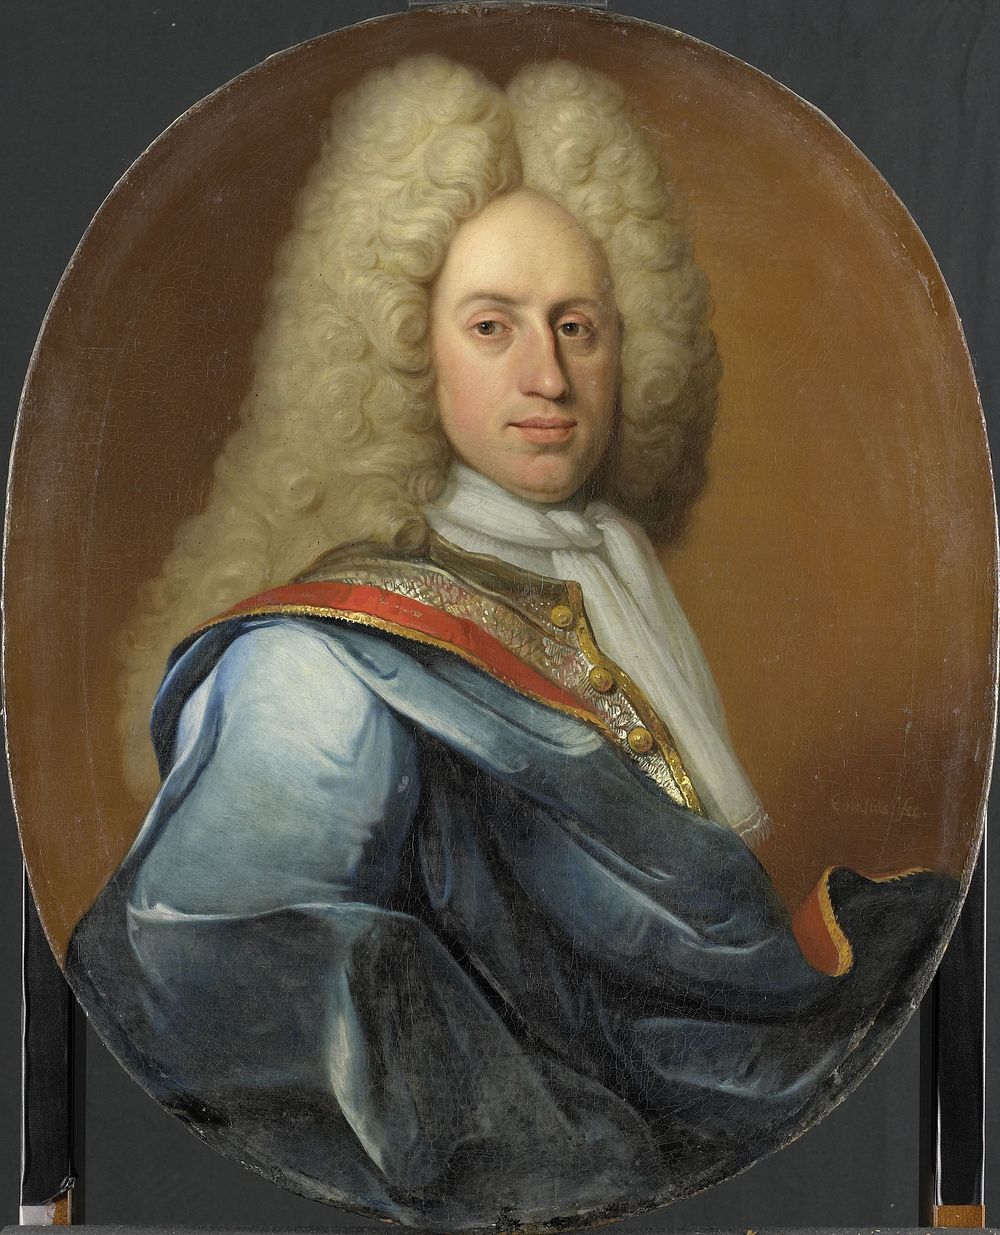 Hieronymus Josephus Boudaen, Lord of St Laurens and Popkensburg (1700 - 1750) by Johan George Collasius